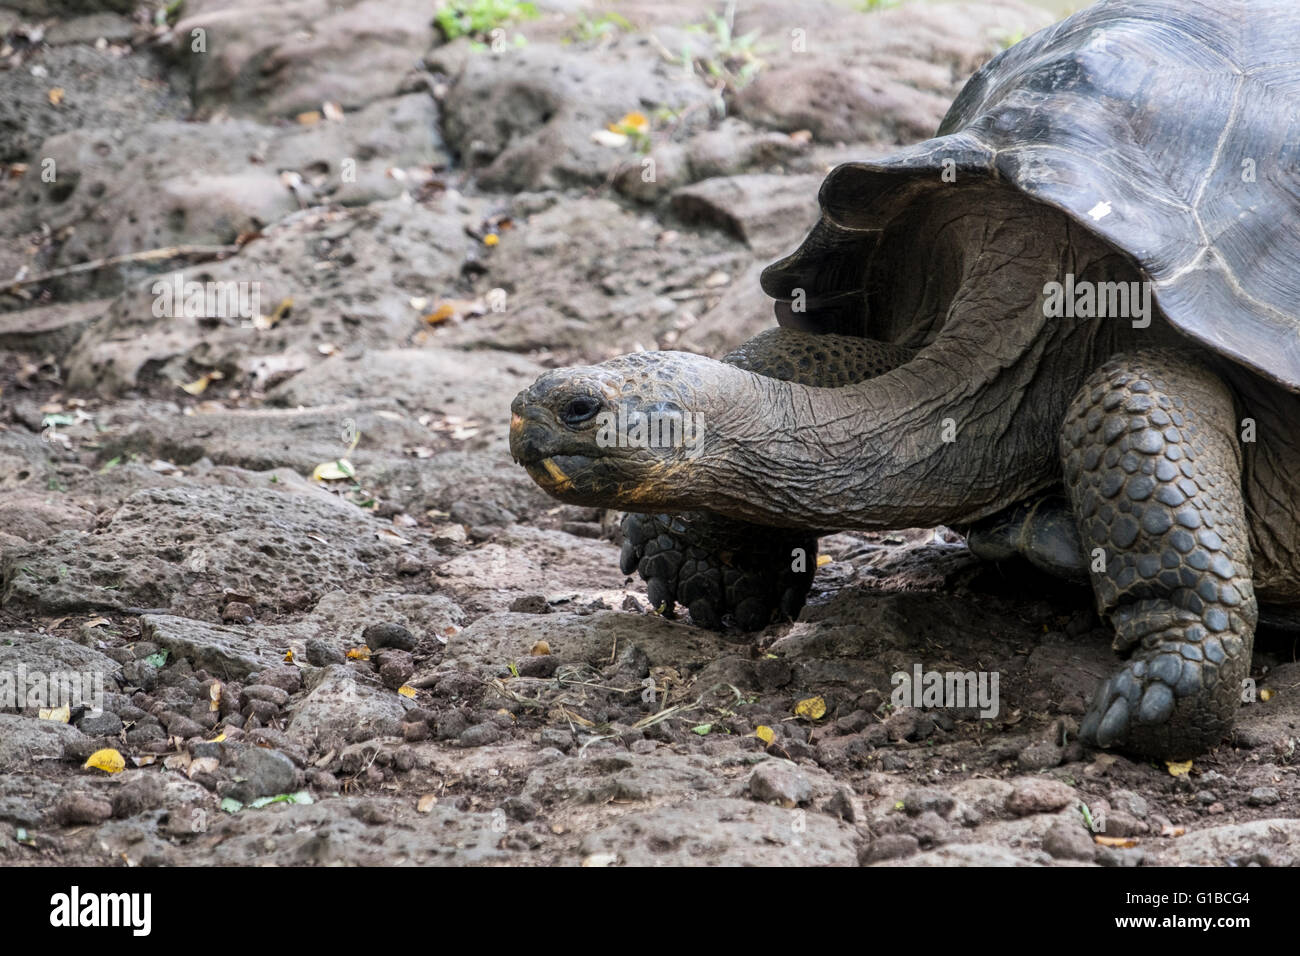 https://c8.alamy.com/comp/G1BCG4/galapagos-giant-tortoise-walking-G1BCG4.jpg